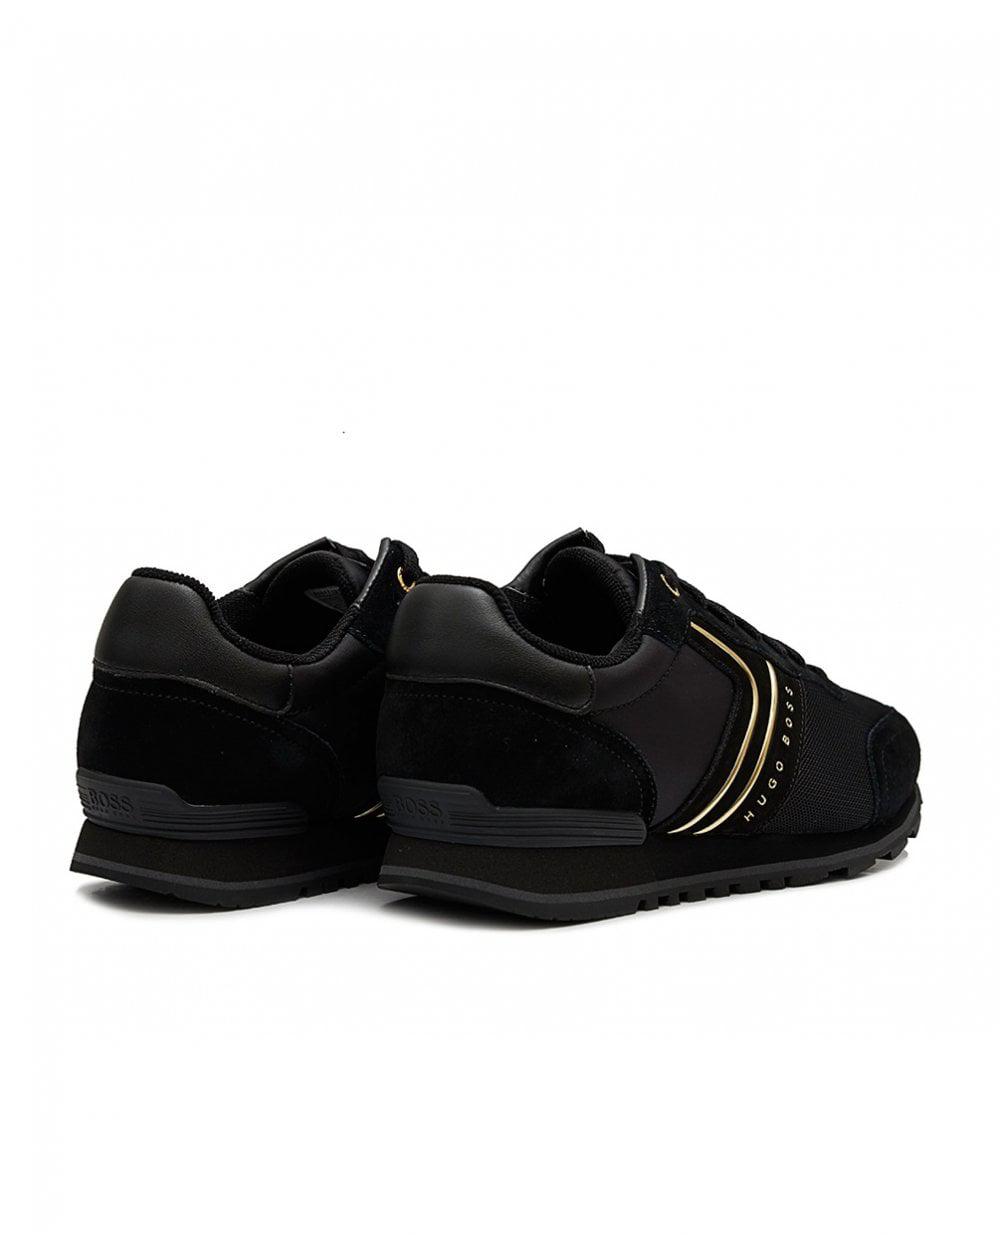 Hugo BOSS Men's Maze_Lowp_Knit2 Fashion Sneakers Shoes 50397637 002 Black Gold 